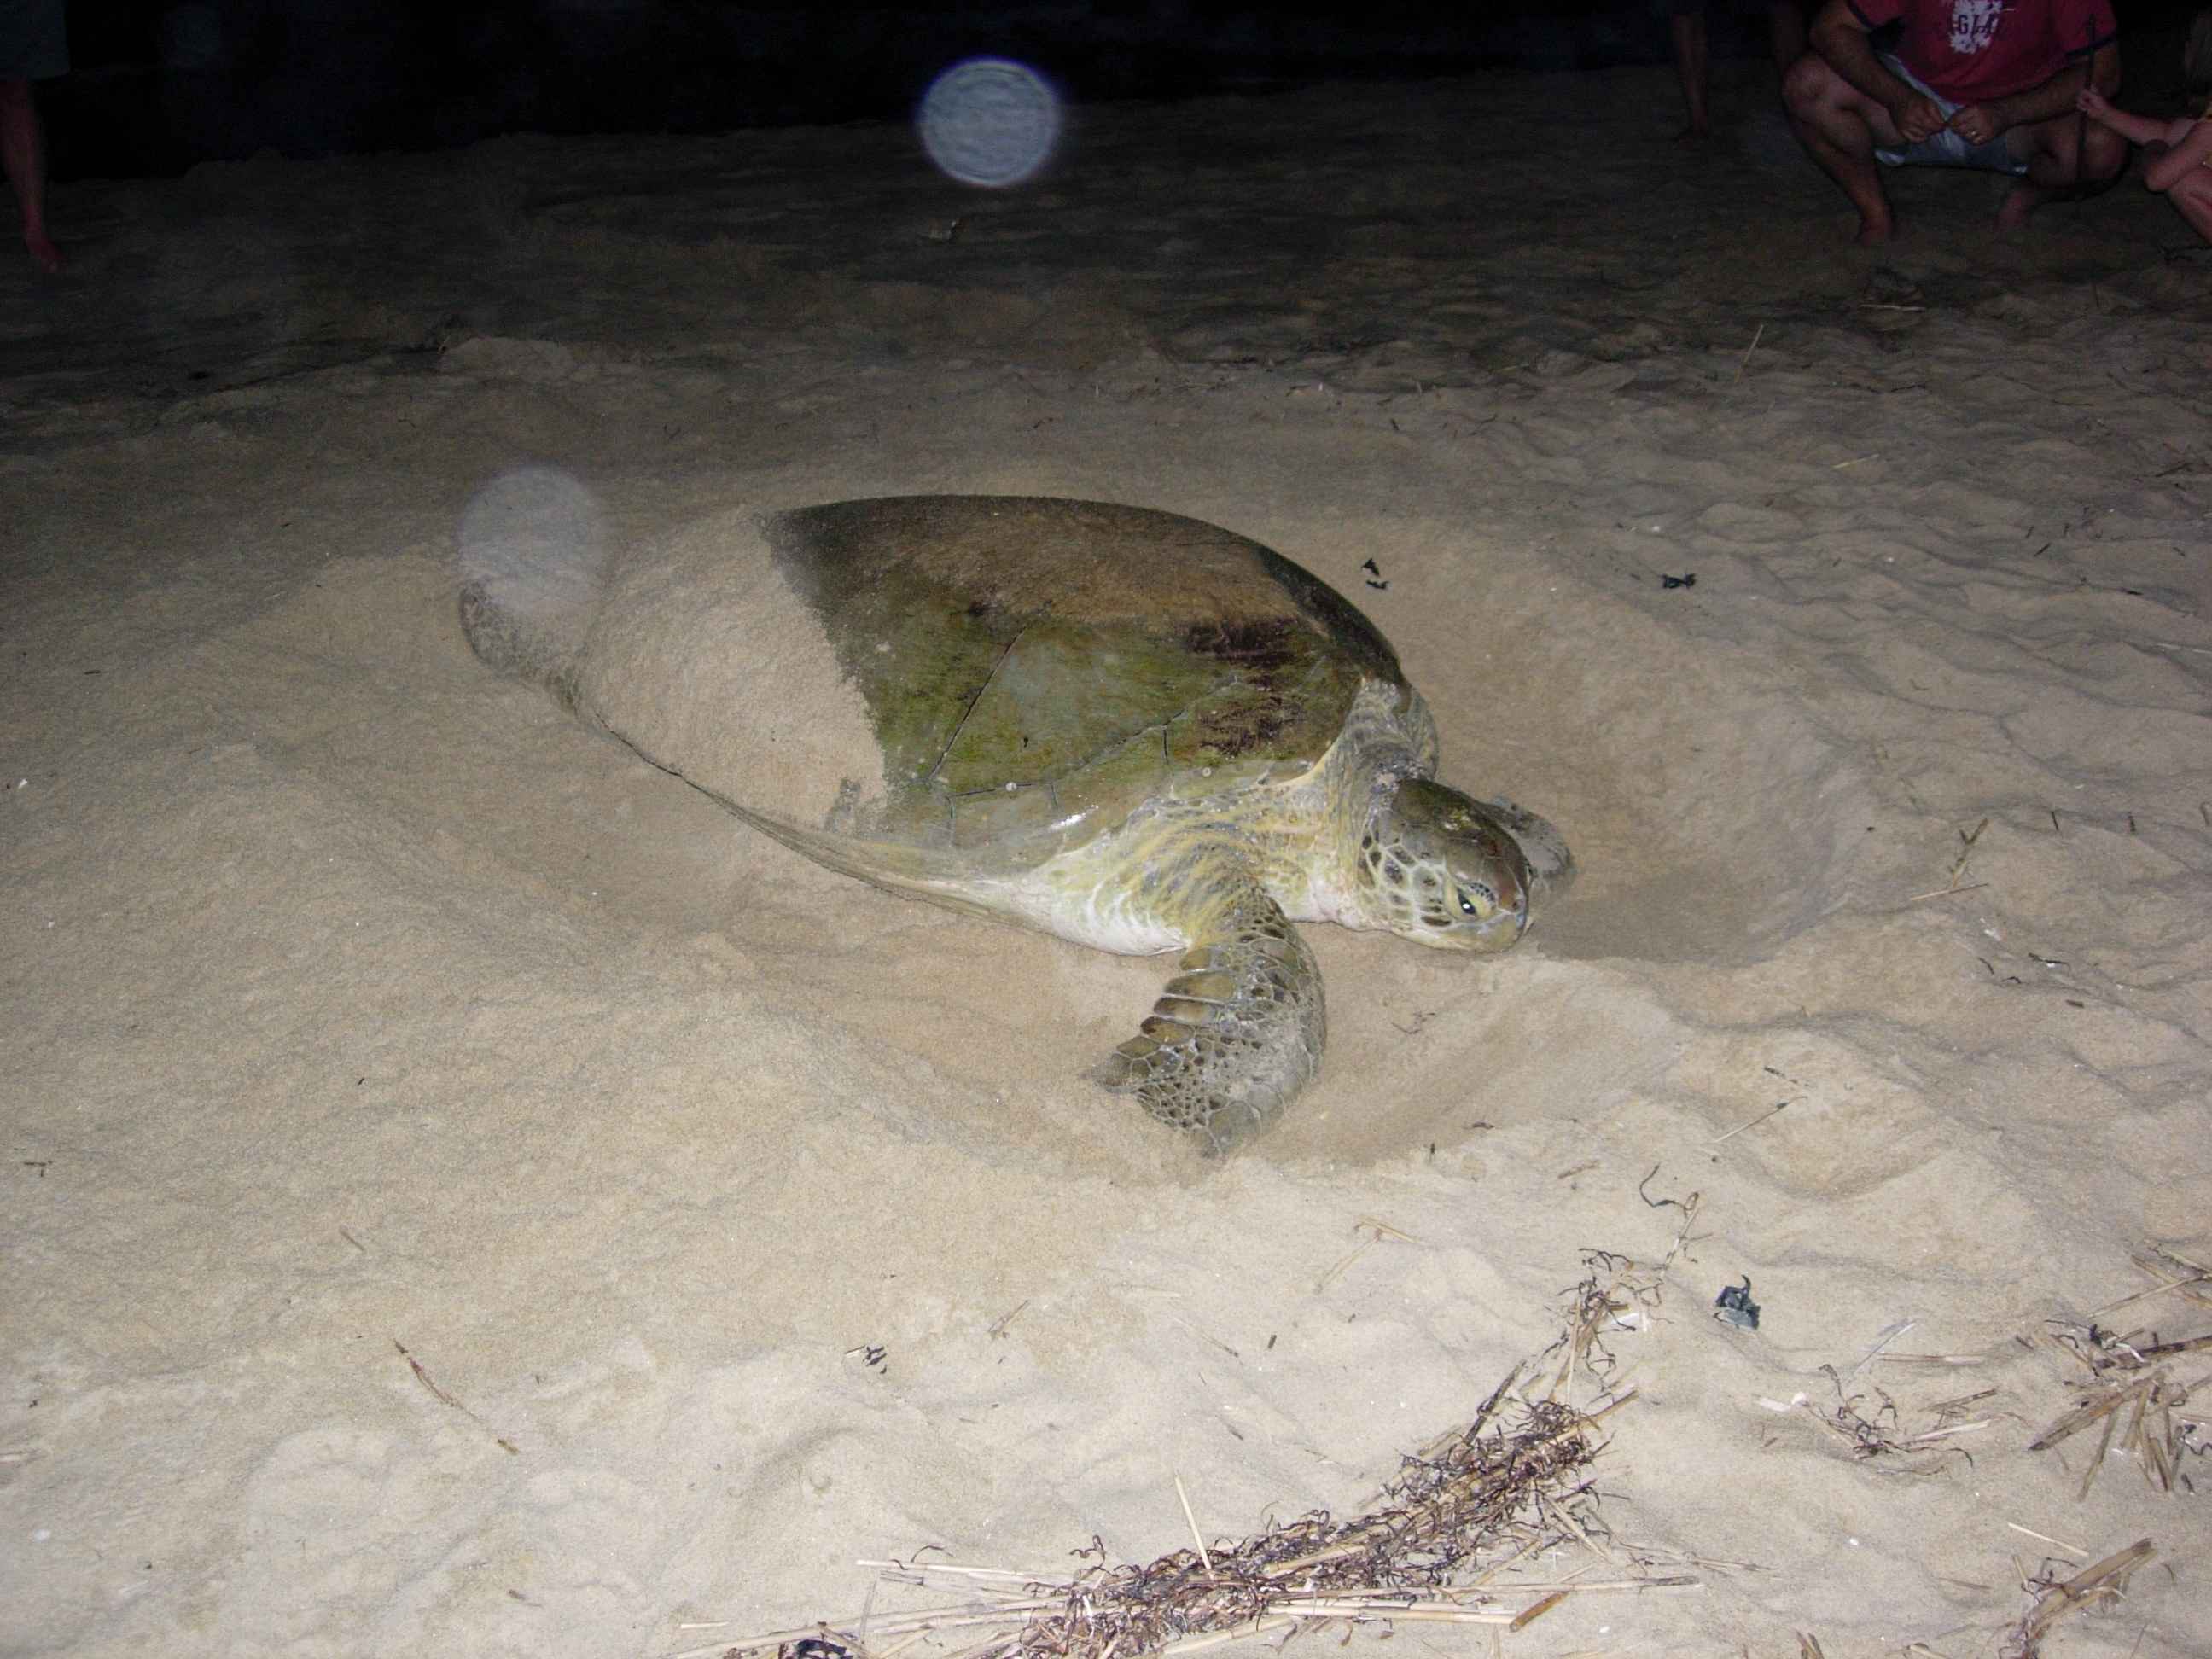 Черепахи без воды. Песчаная черепаха. Черепаха в воде. Черепахи роют Норы. Черепаха на песке.